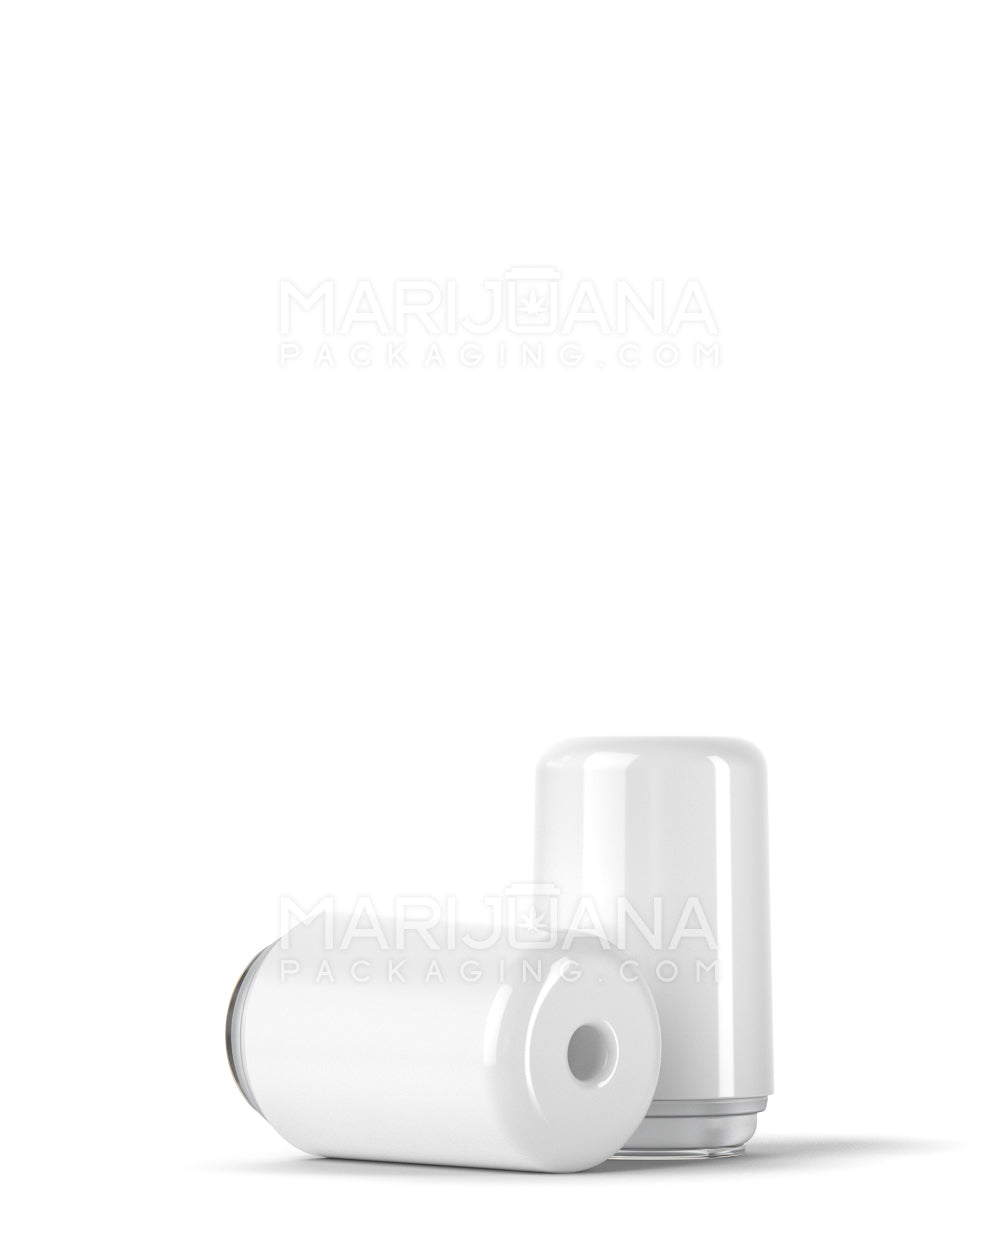 RAE Round Vape Mouthpiece for Hand Press Ceramic Cartridges | White Ceramic - Hand Press | Sample